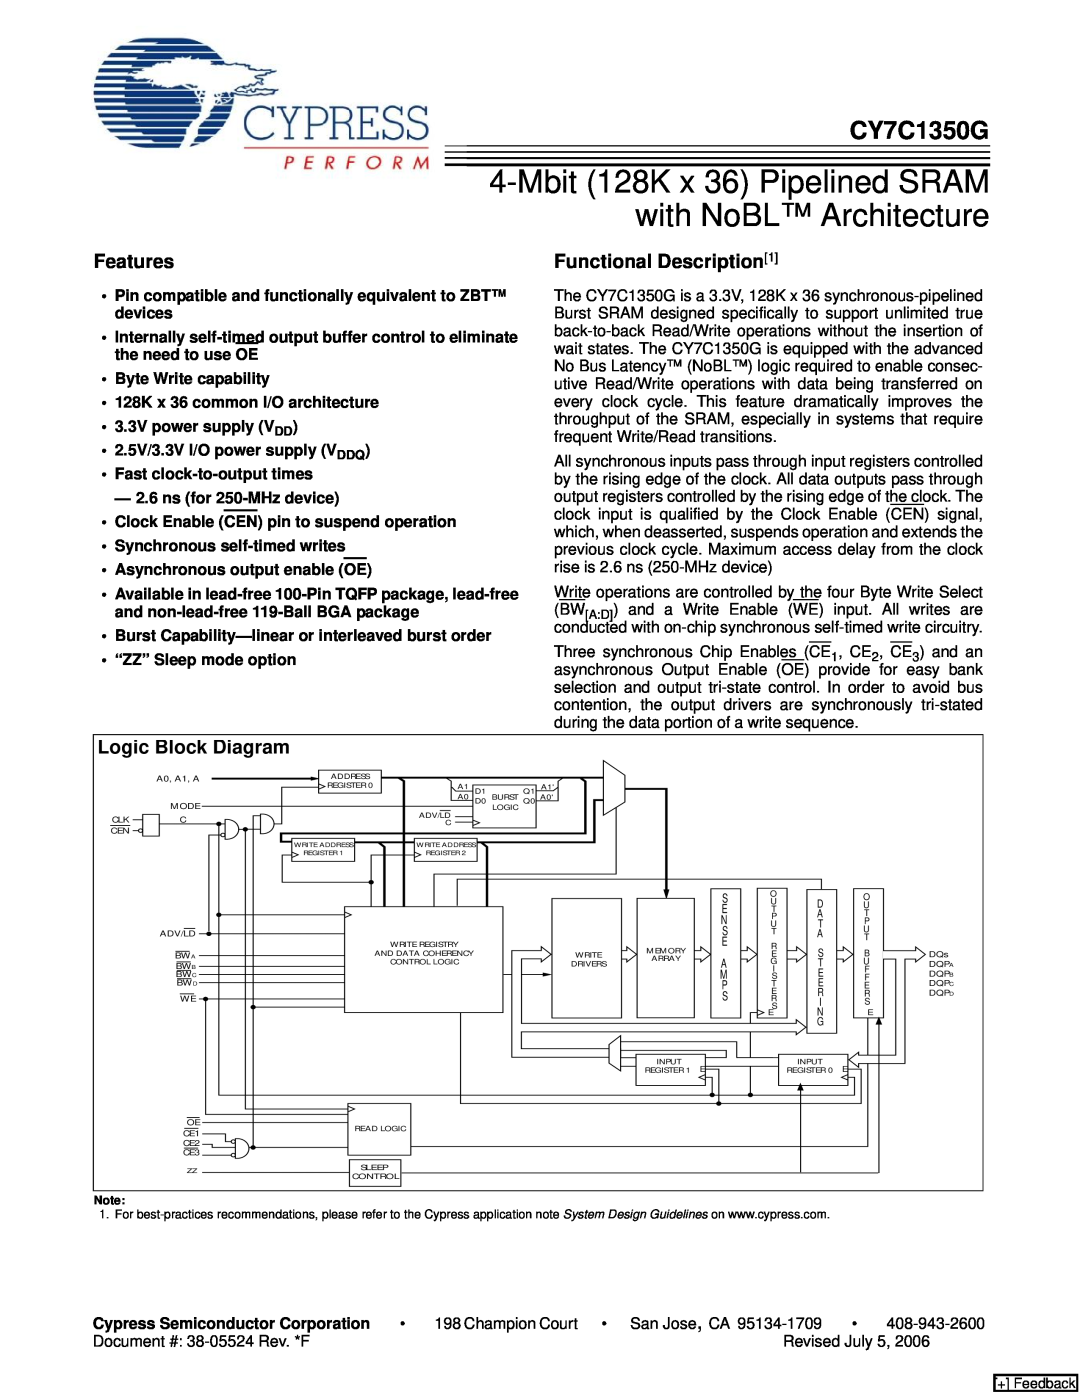 Cypress CY7C1350G manual Features, Logic Block Diagram, Functional Description1 